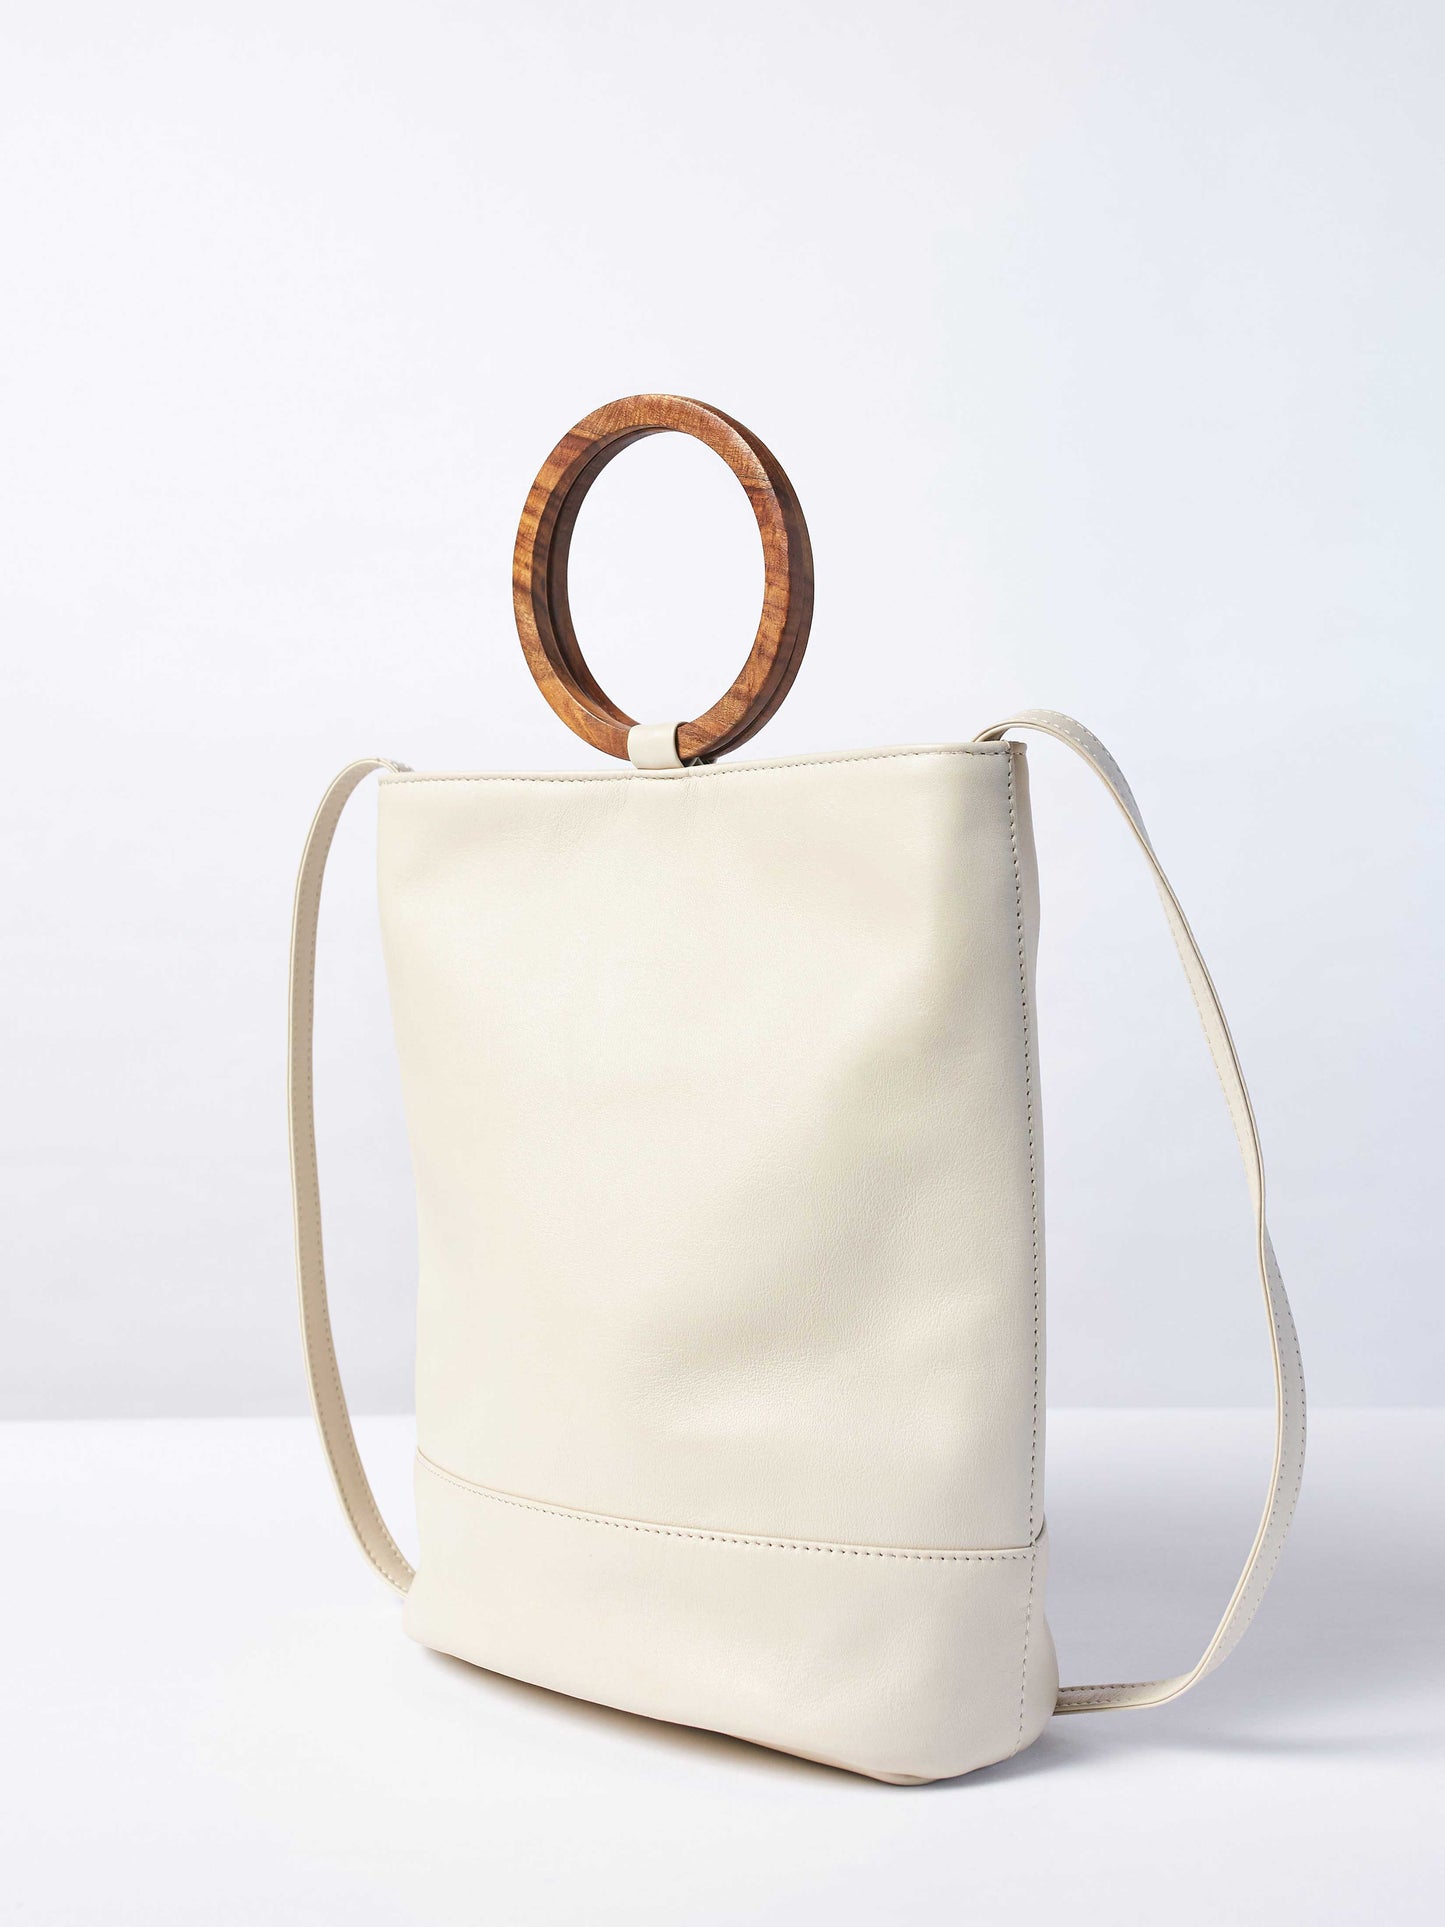 White Leather Tote and Crossbody Handbag by Payton James: Nashville Handbag Designer closeup of crossbody strap